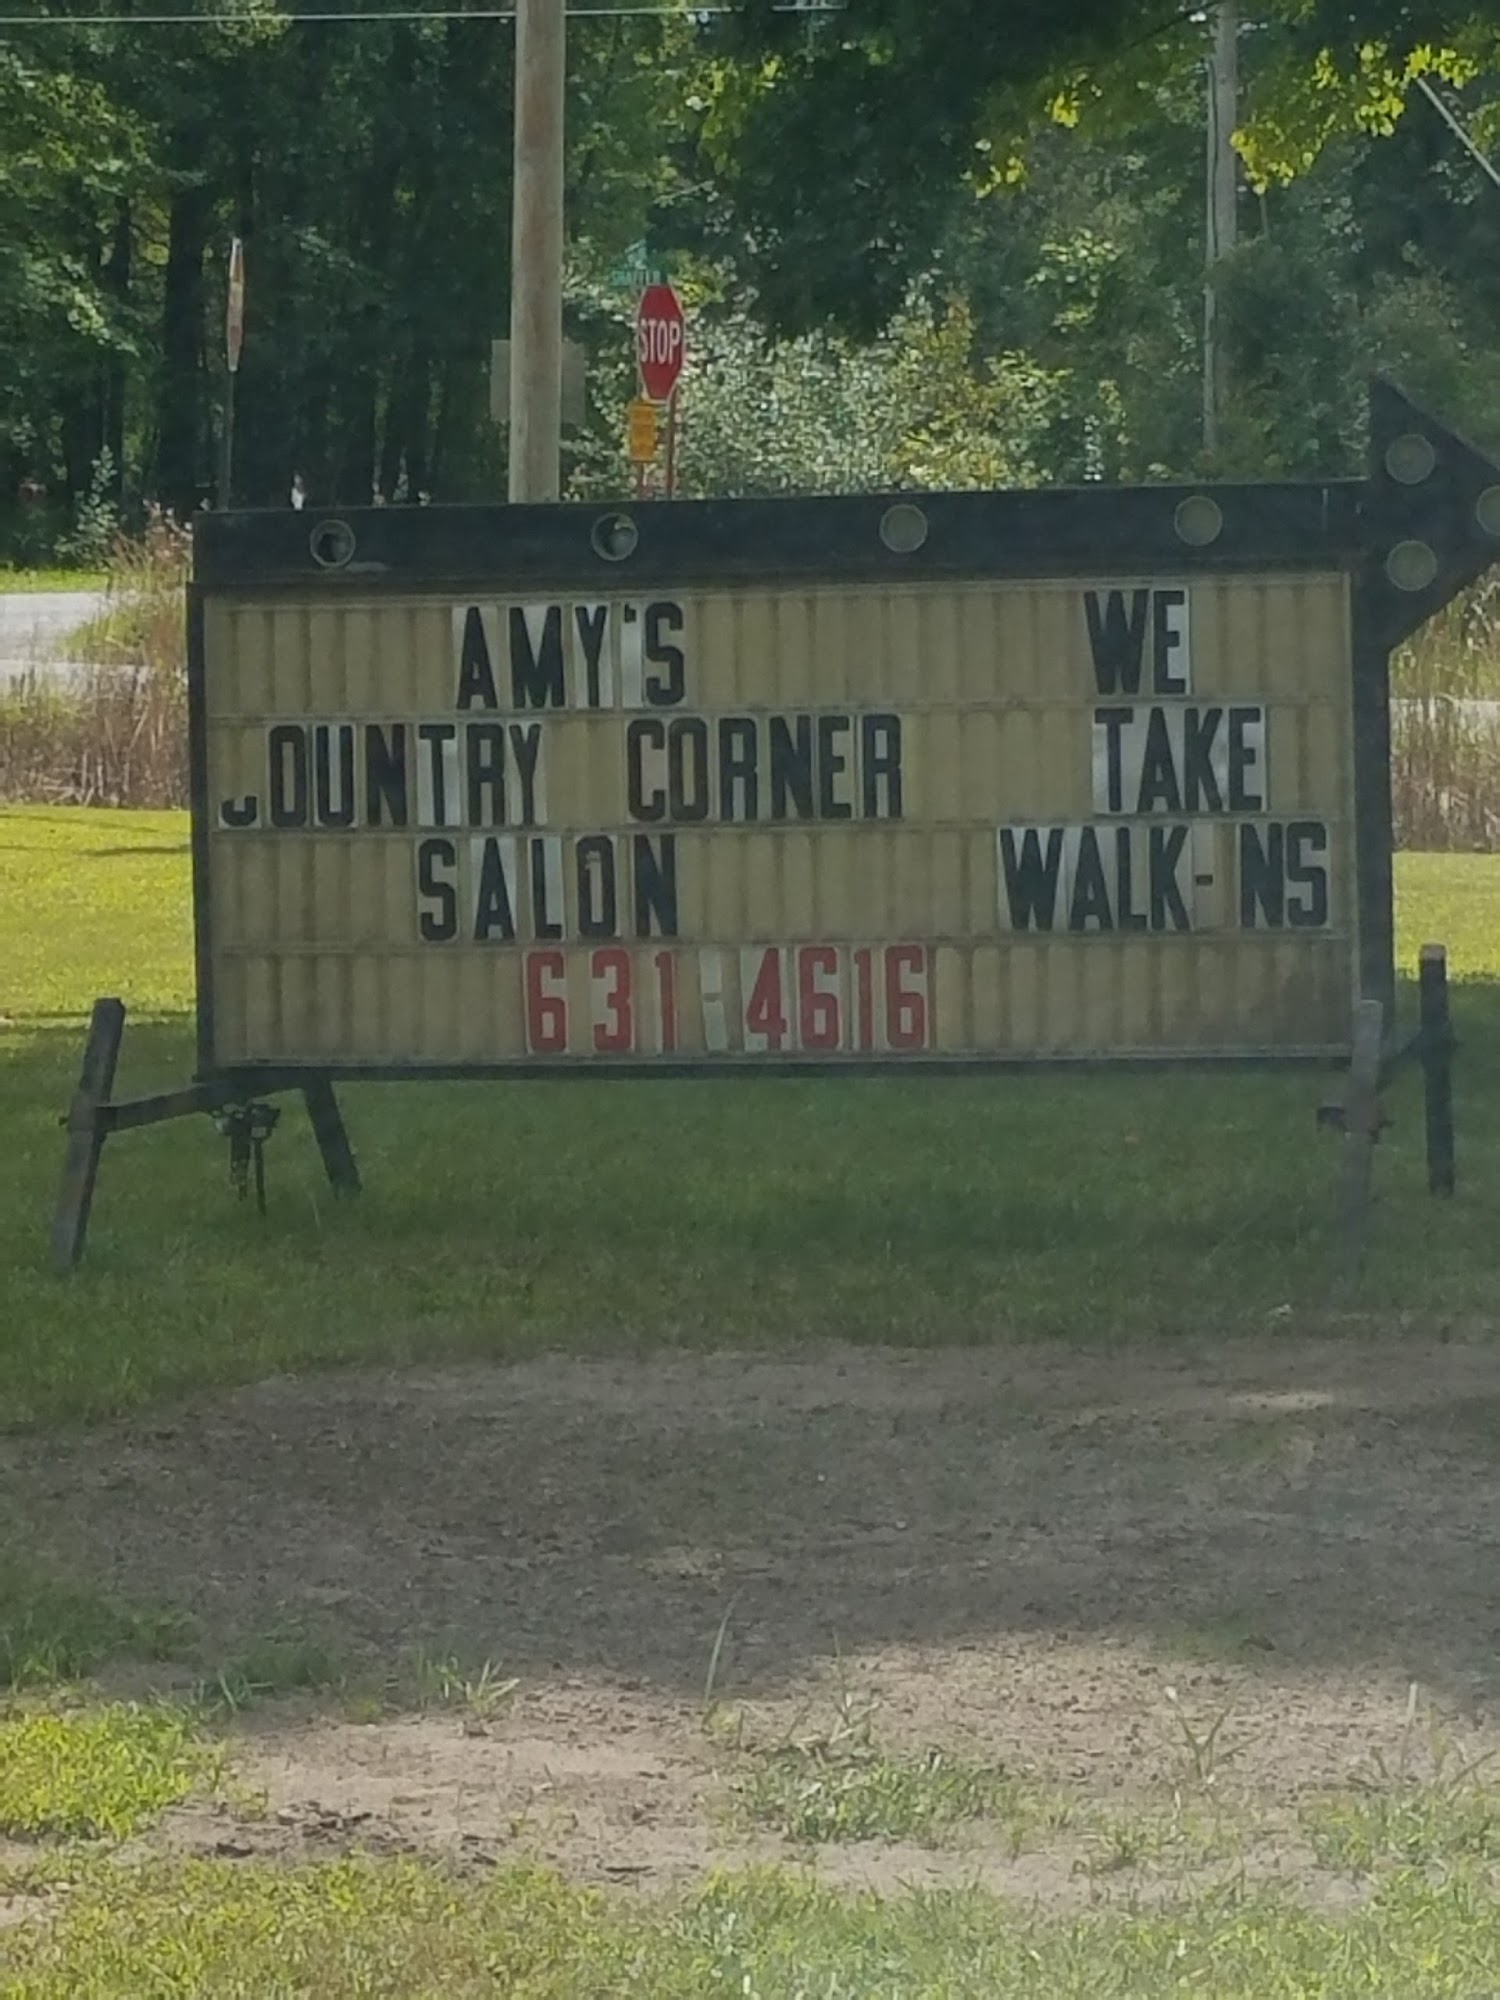 Amy's Country Corner Salon